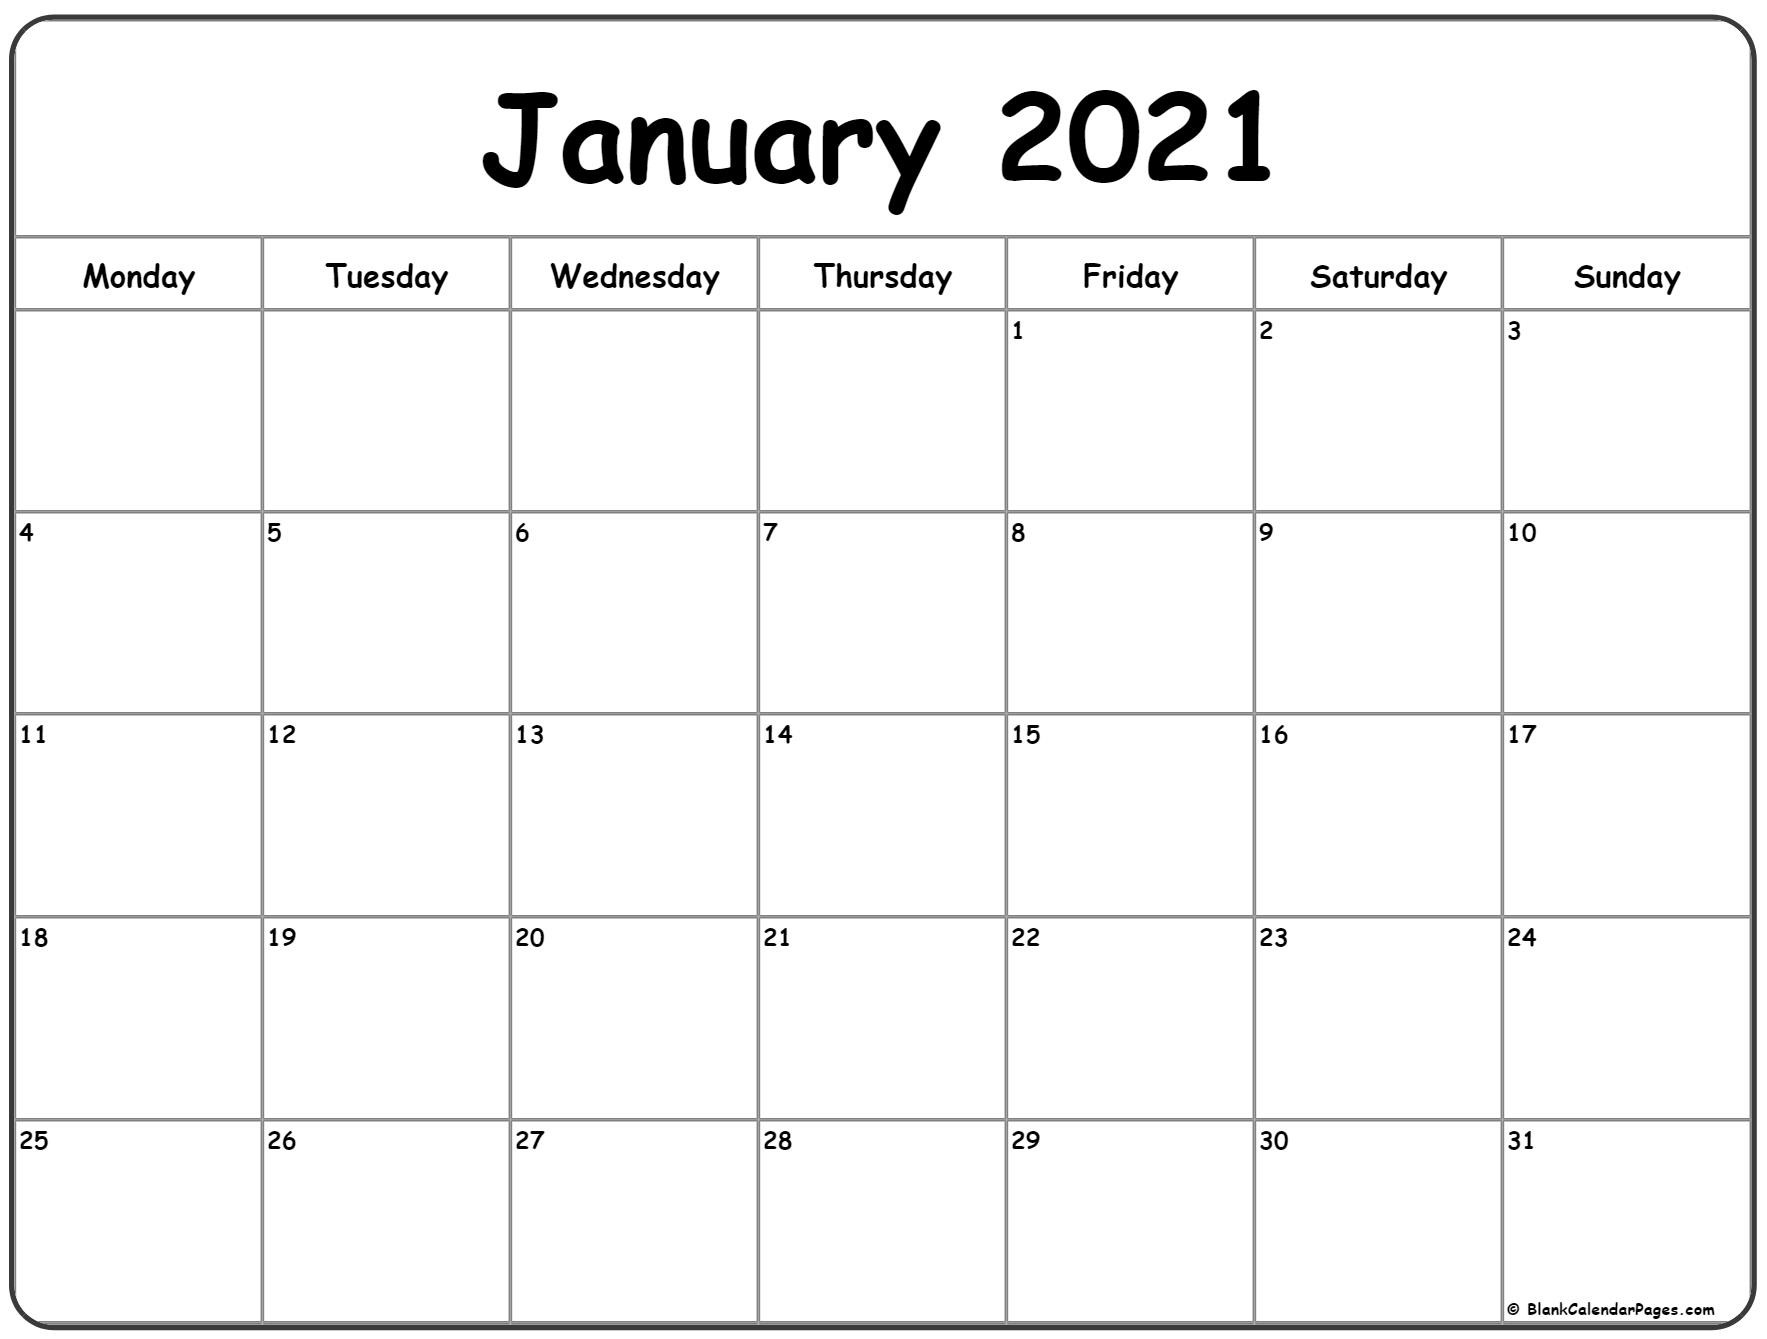 January 2021 Monday Calendar | Monday To Sunday-2021 Calendar That Shows Only Monday Through Friday